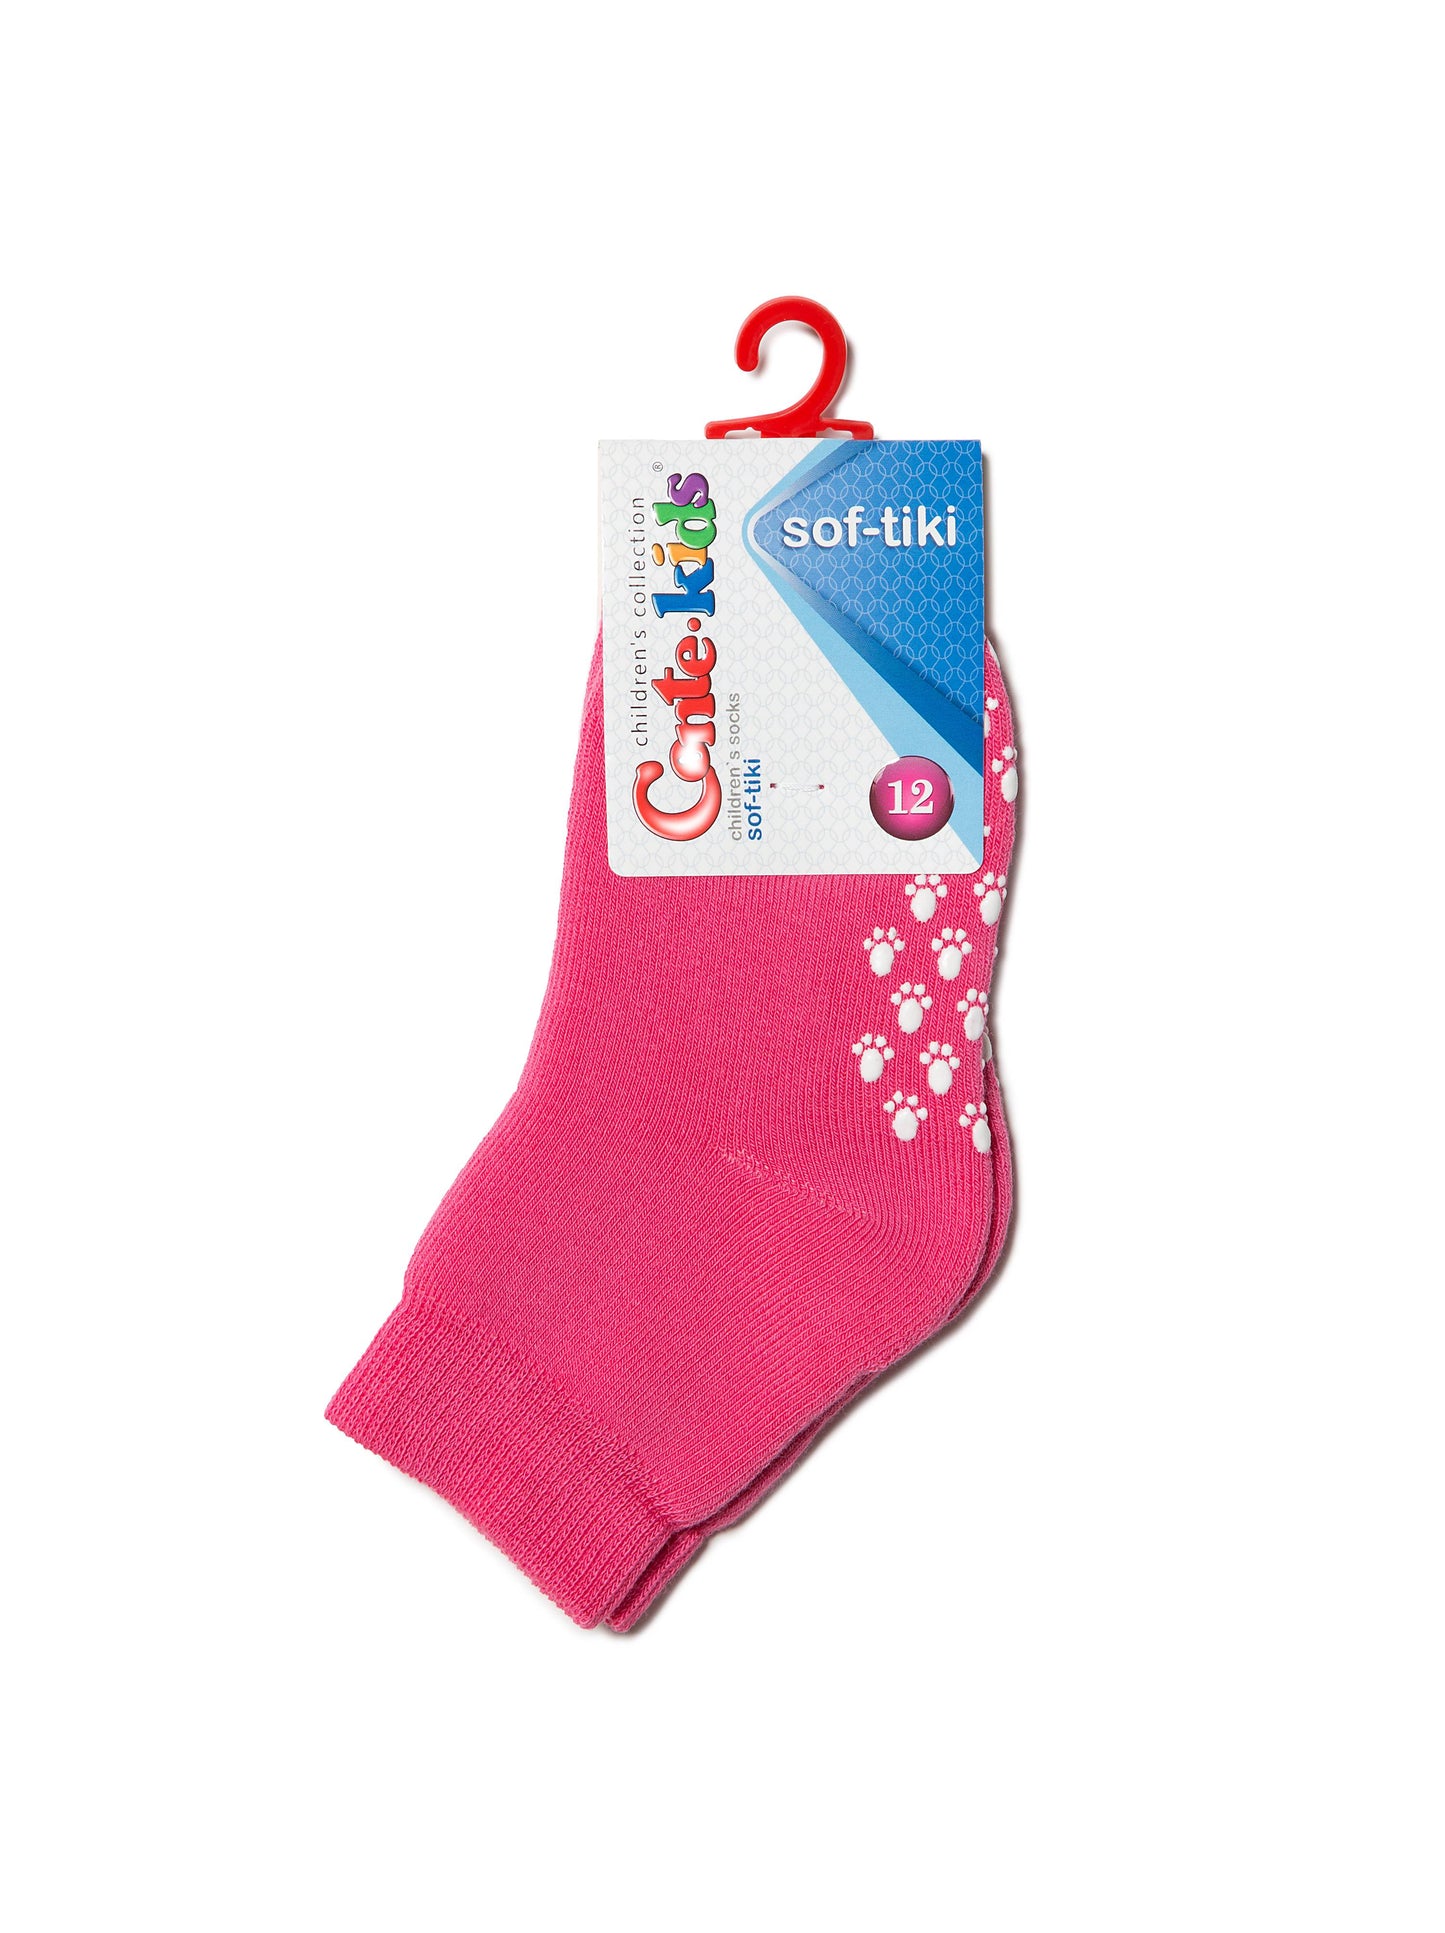 Conte-Kids Sof-tiki #7С-53СП(000) - Lot of 2 pairs Cotton Terry Socks For Boys & Girls